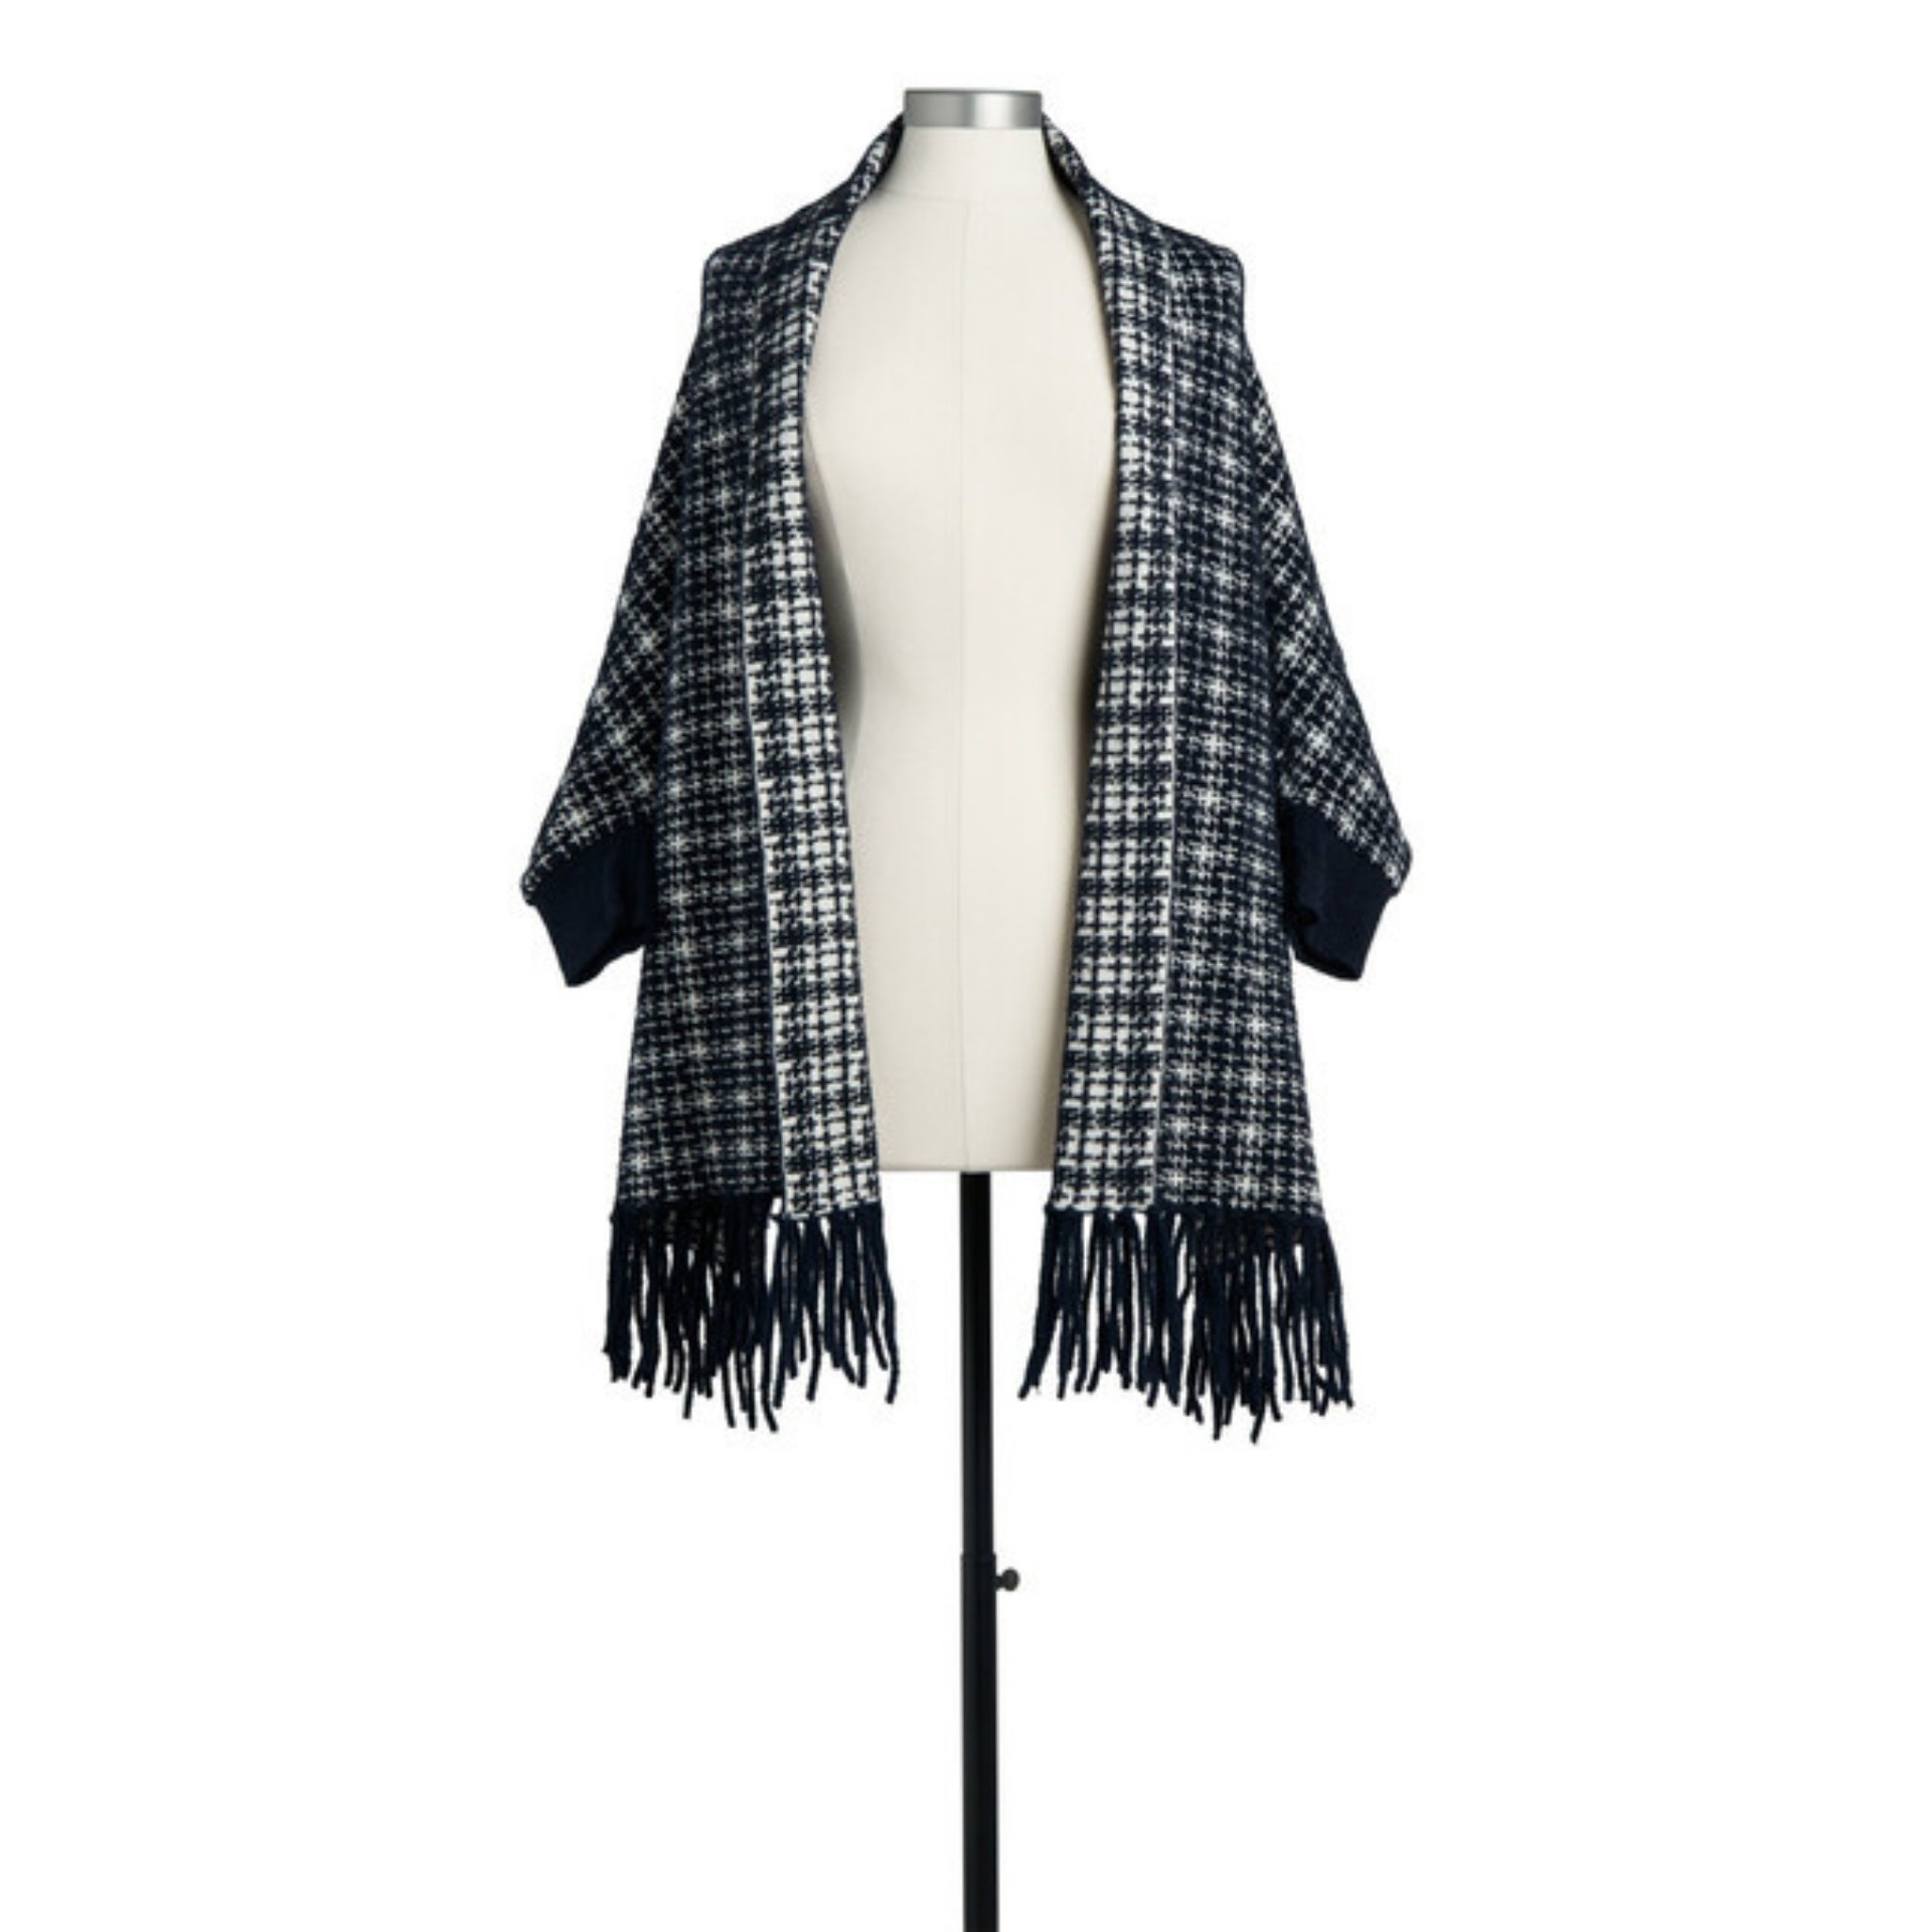 tweed shawl with sleeves - black/white